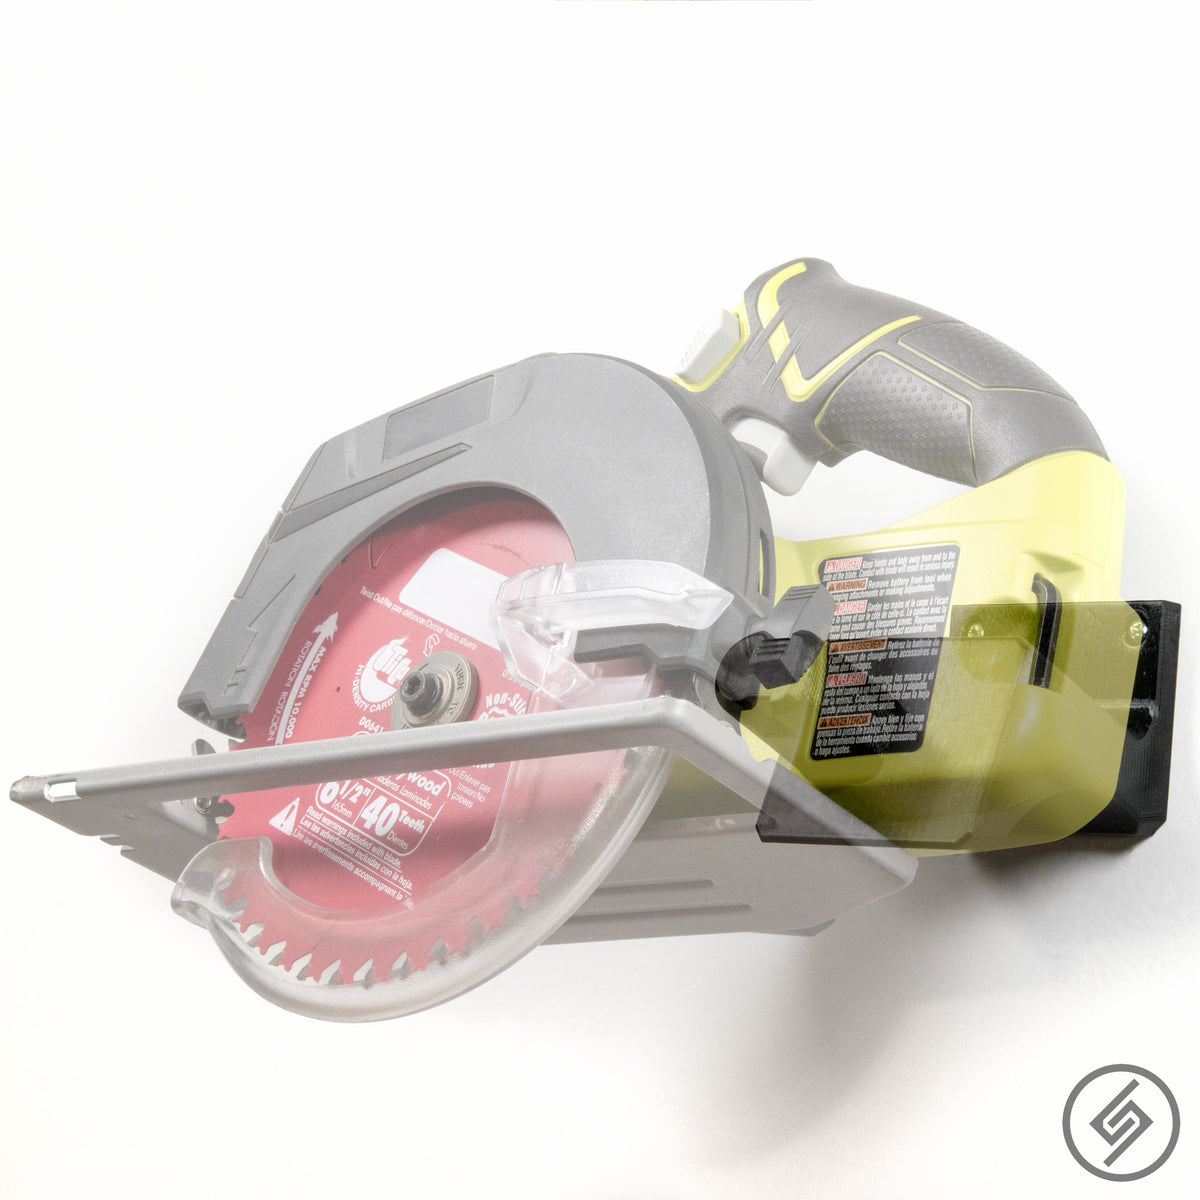 3D Printed Tool Mount for Ryobi Circular Saw/ Vacuum or Other 18V Ryobi  Tools 